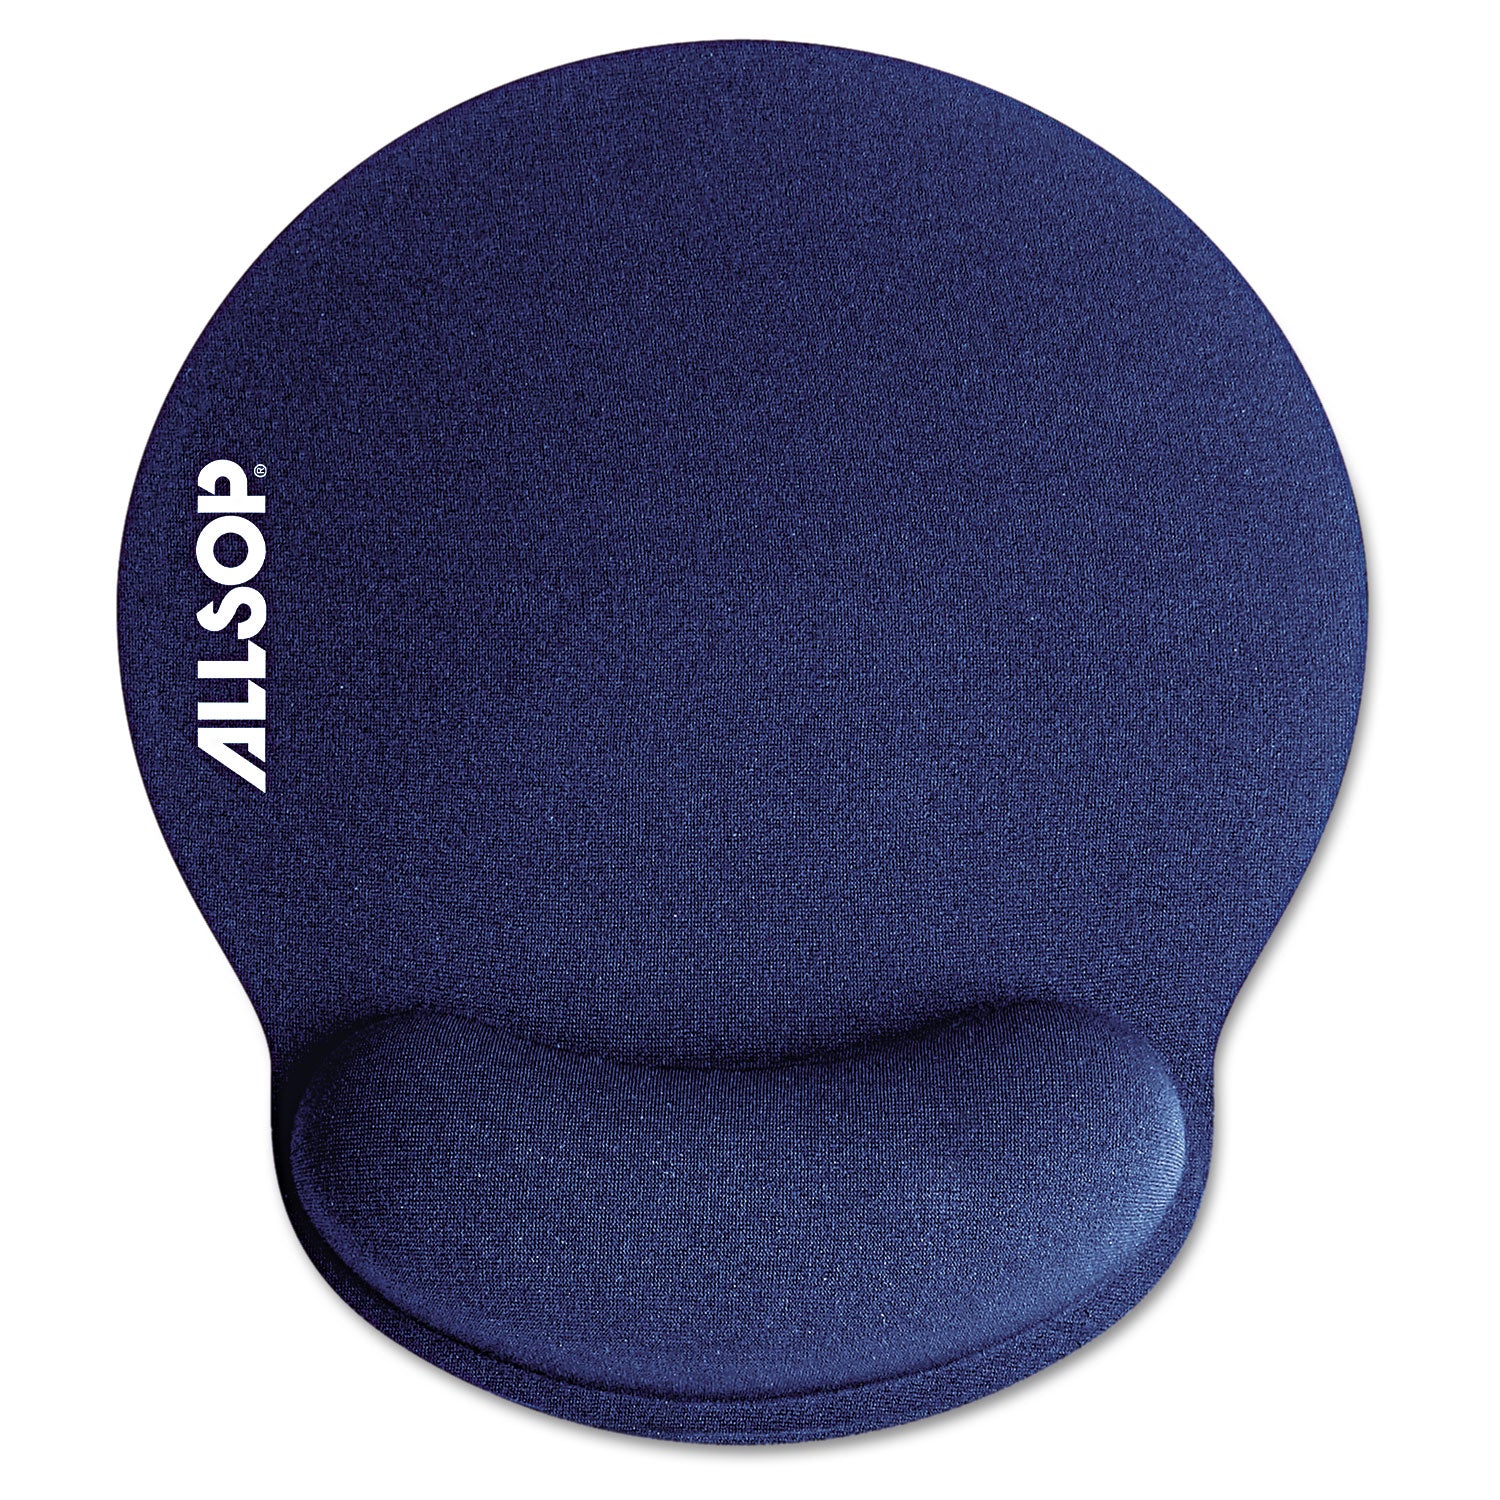 MousePad Pro Memory Foam Mouse Pad with Wrist Rest, 9 x 10, Blue - 